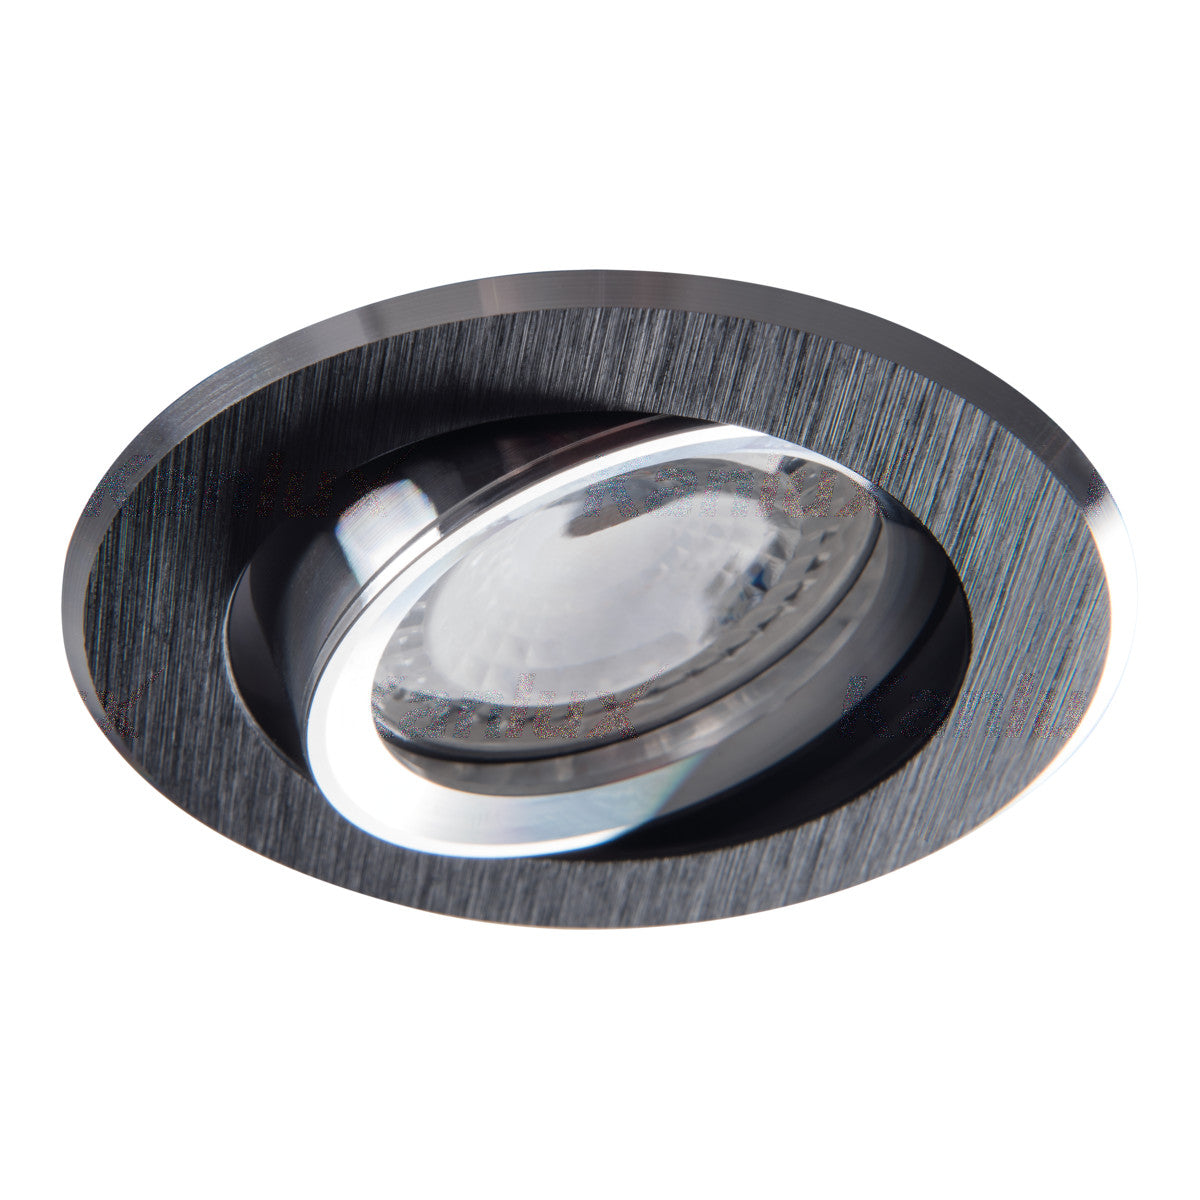 Kanlux GWEN Ceiling Recessed GU10 Tilt Adjustable Downlight Spot Light Fitting 240V